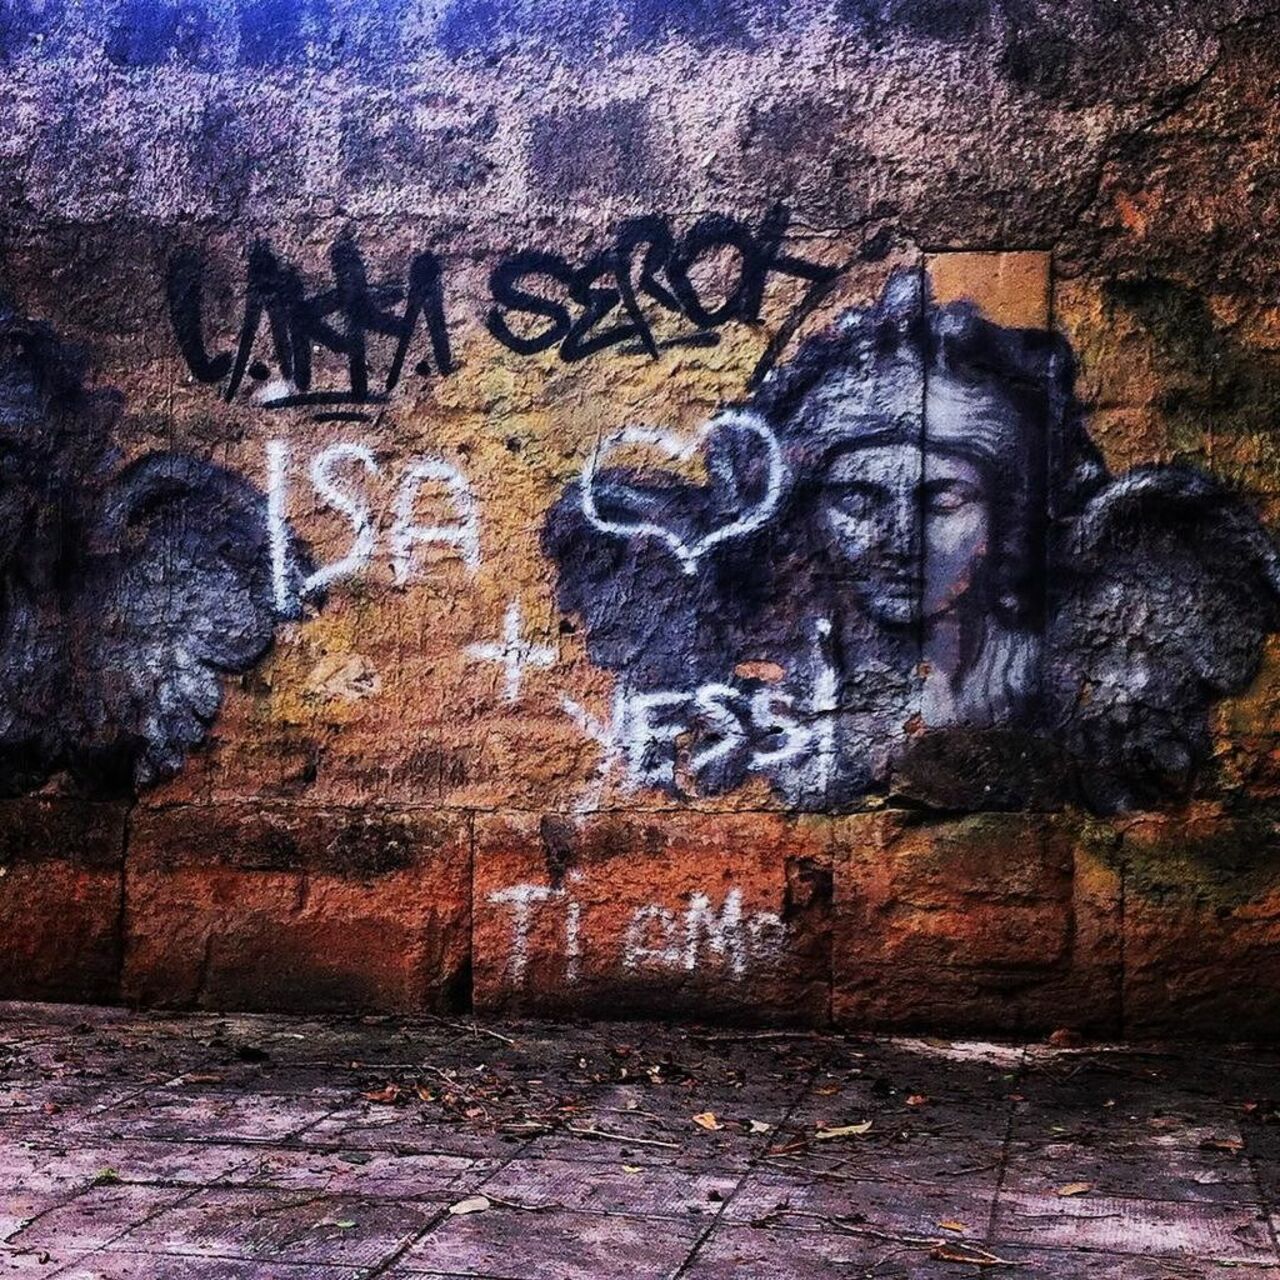 #graffiti #sicily #palermo #streetart #publicart https://t.co/cVHbmBVioS